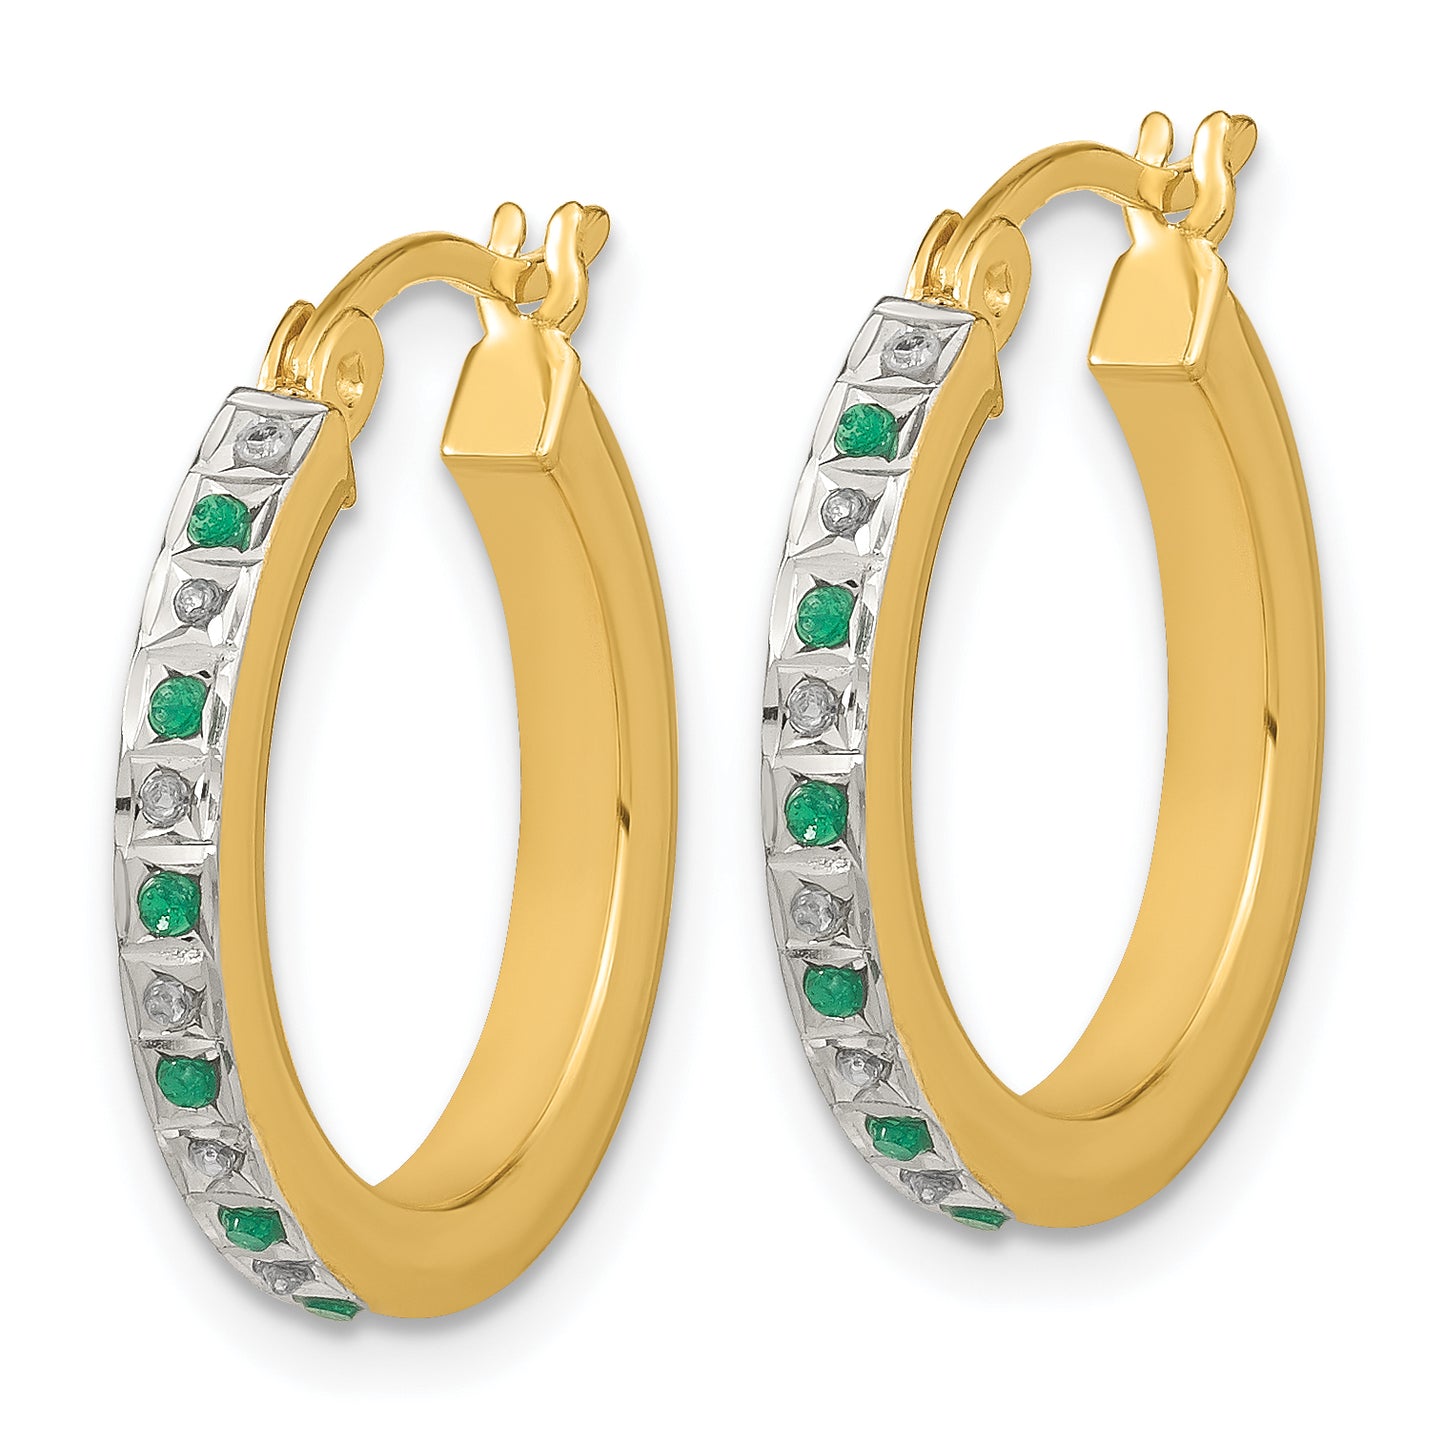 SS Gold-Plated Diamond Mystique Dia/Emerald Earrings/Bangle Set